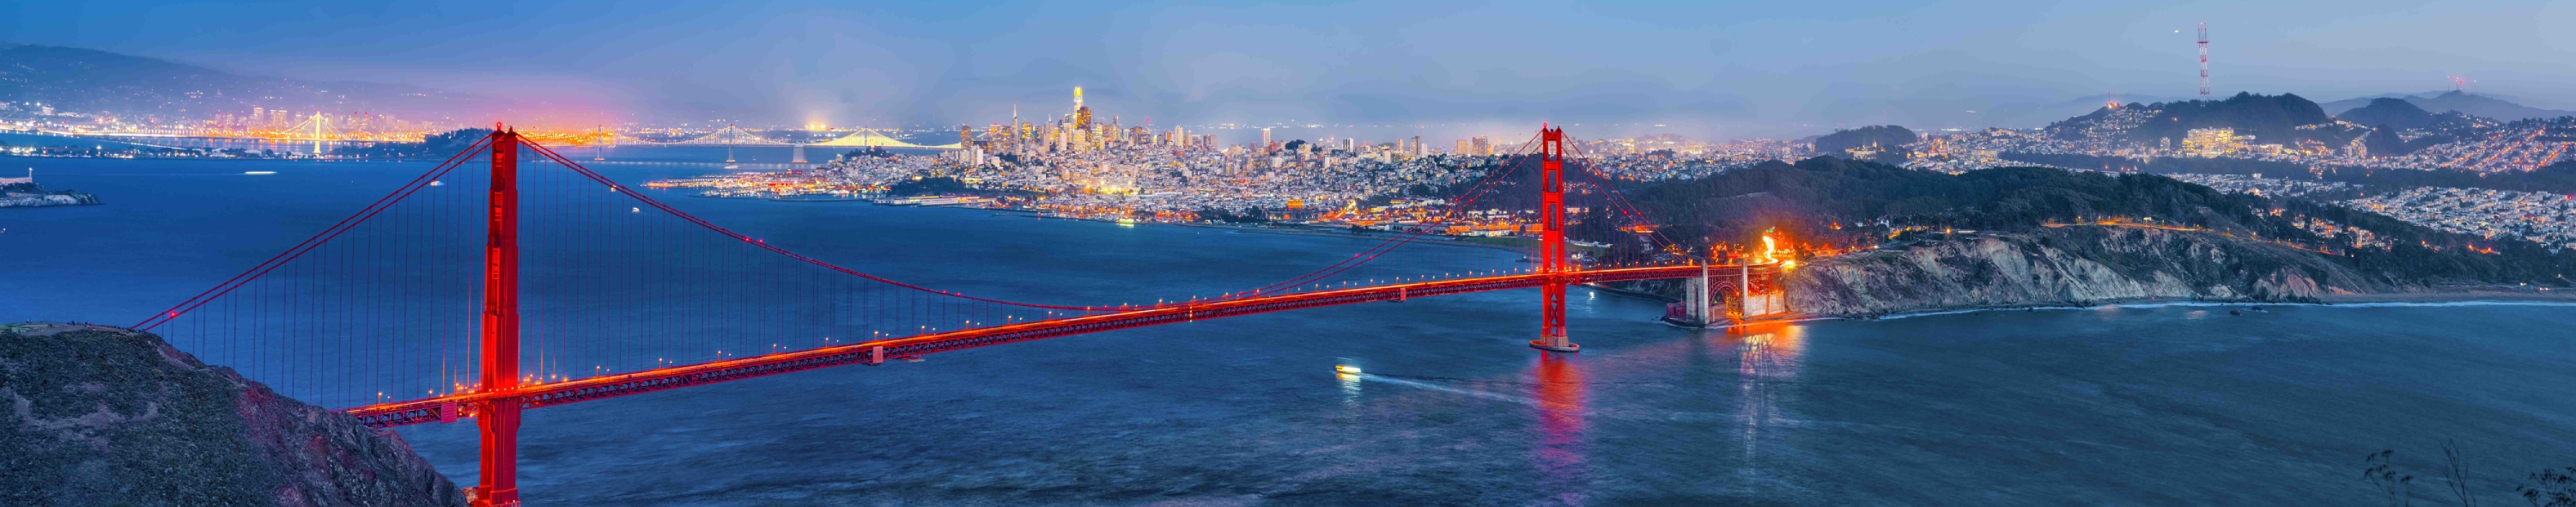 Gold Gate Bridge and San Francisco